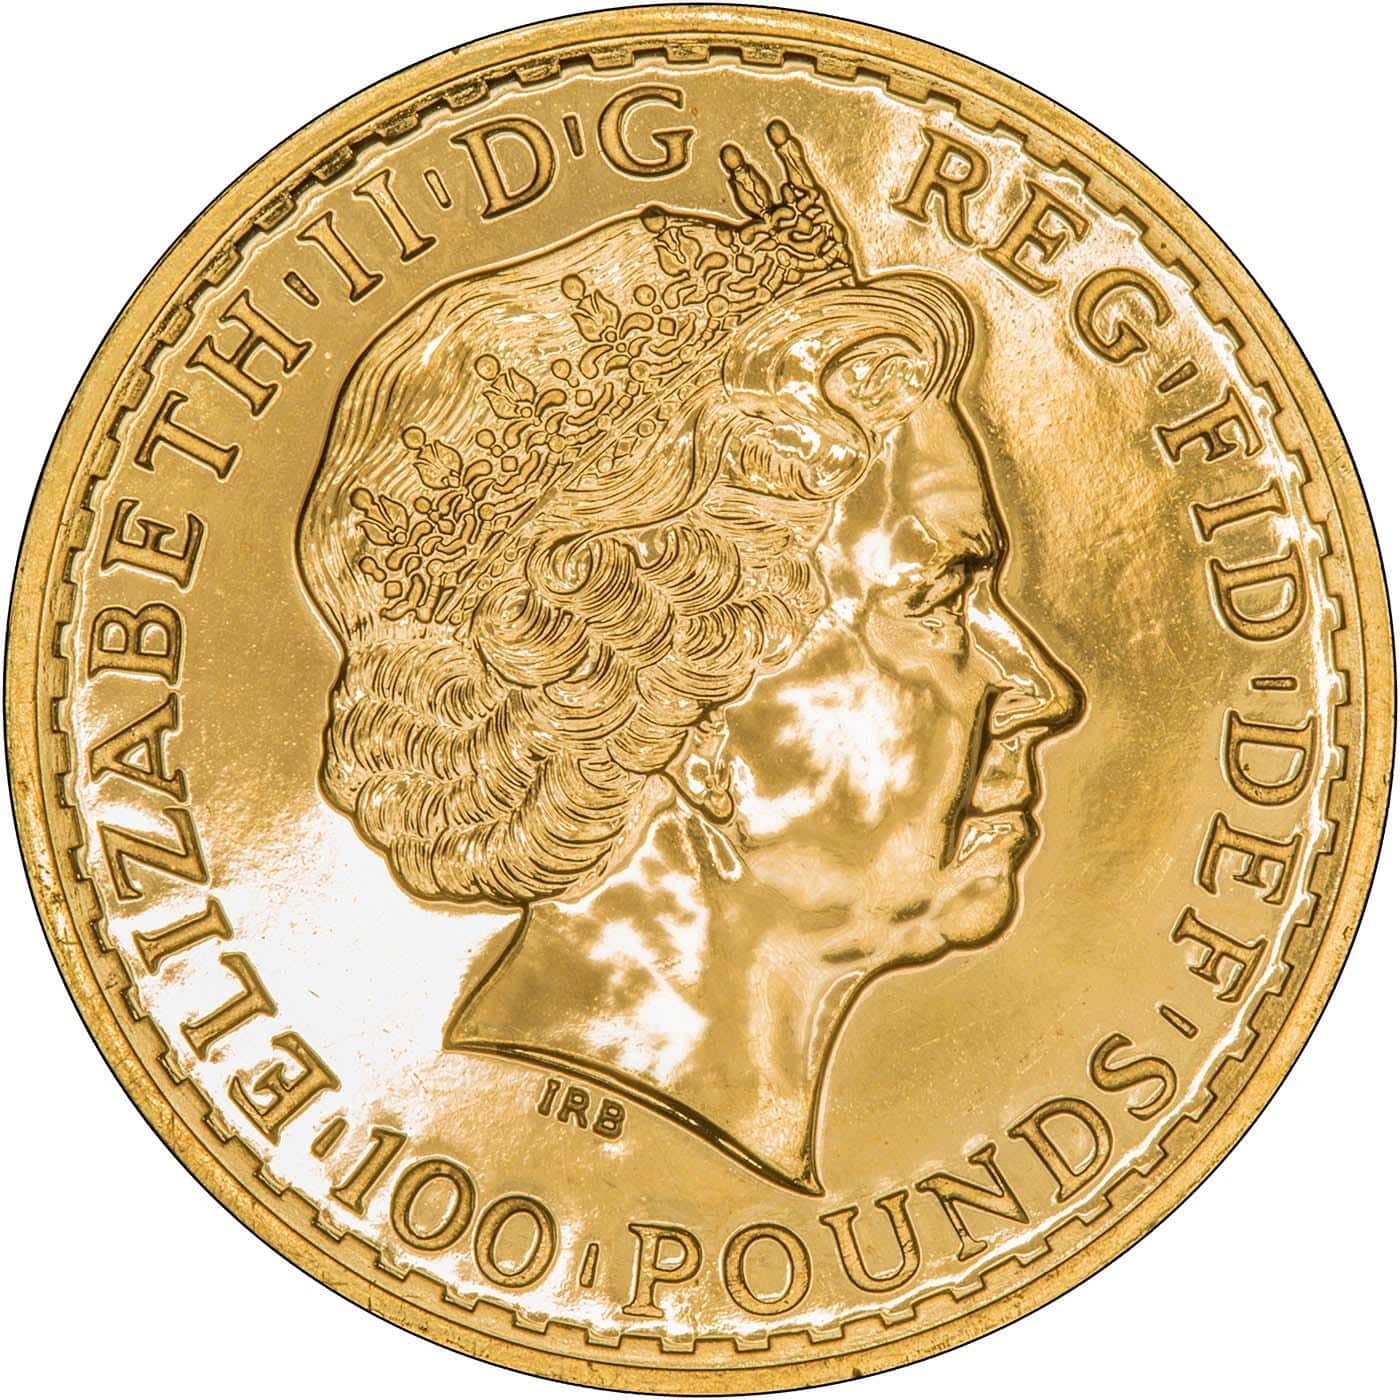 2014 Gold Britannia 1 oz Bullion Coin Horse Privy